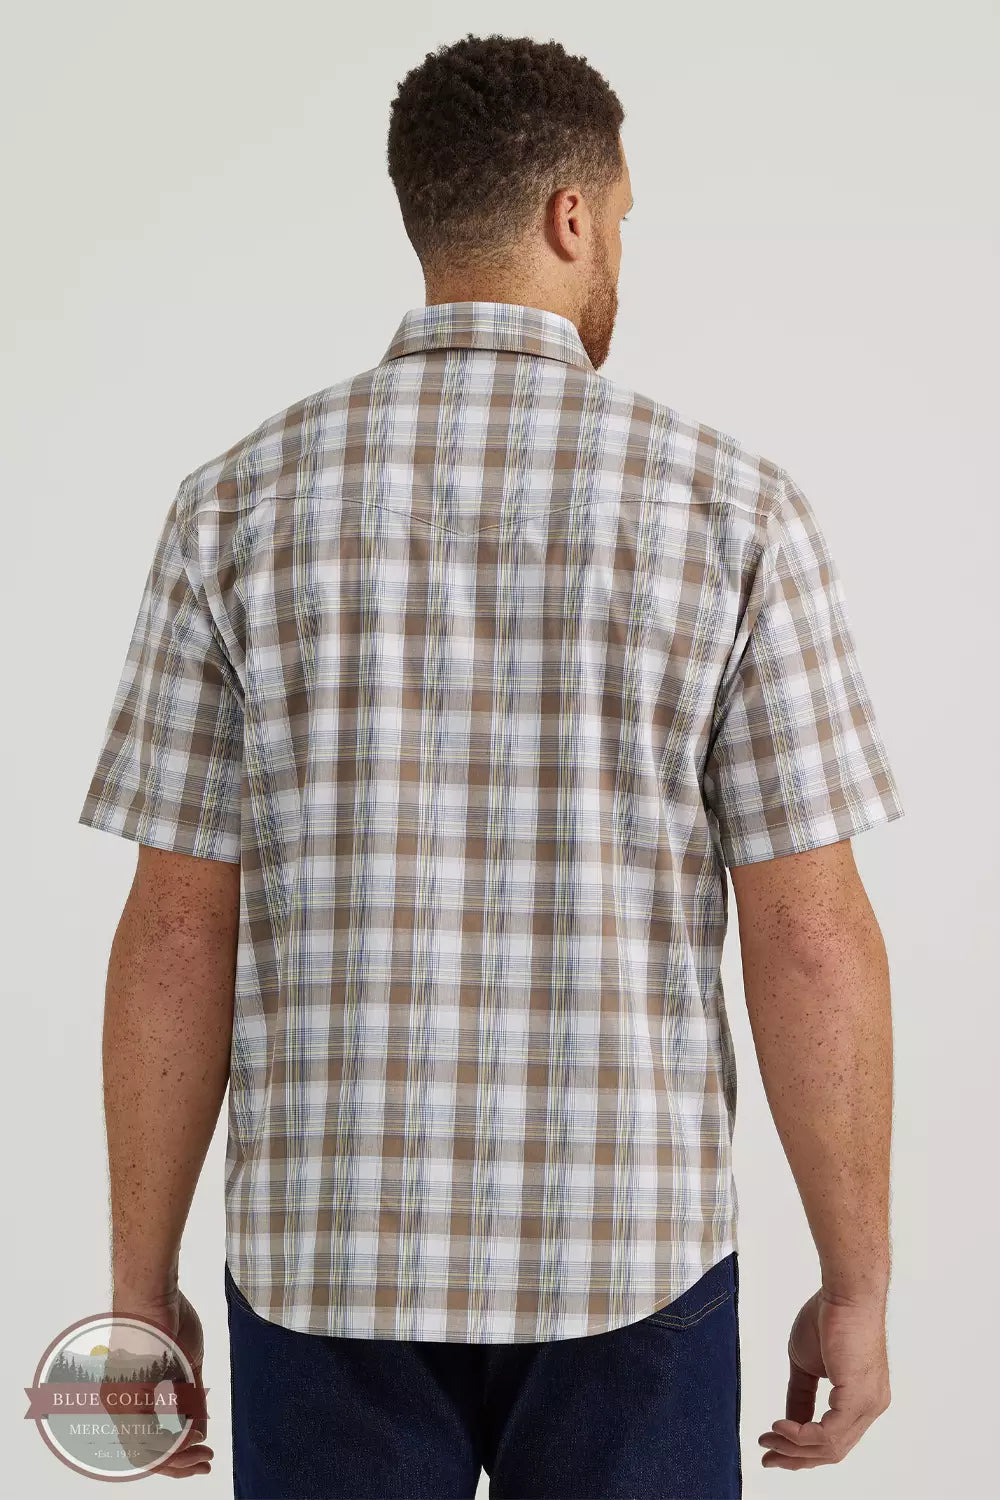 Wrangler 112344412 Wrinkle Resistant Snap Shirt in Greige Plaid Back View